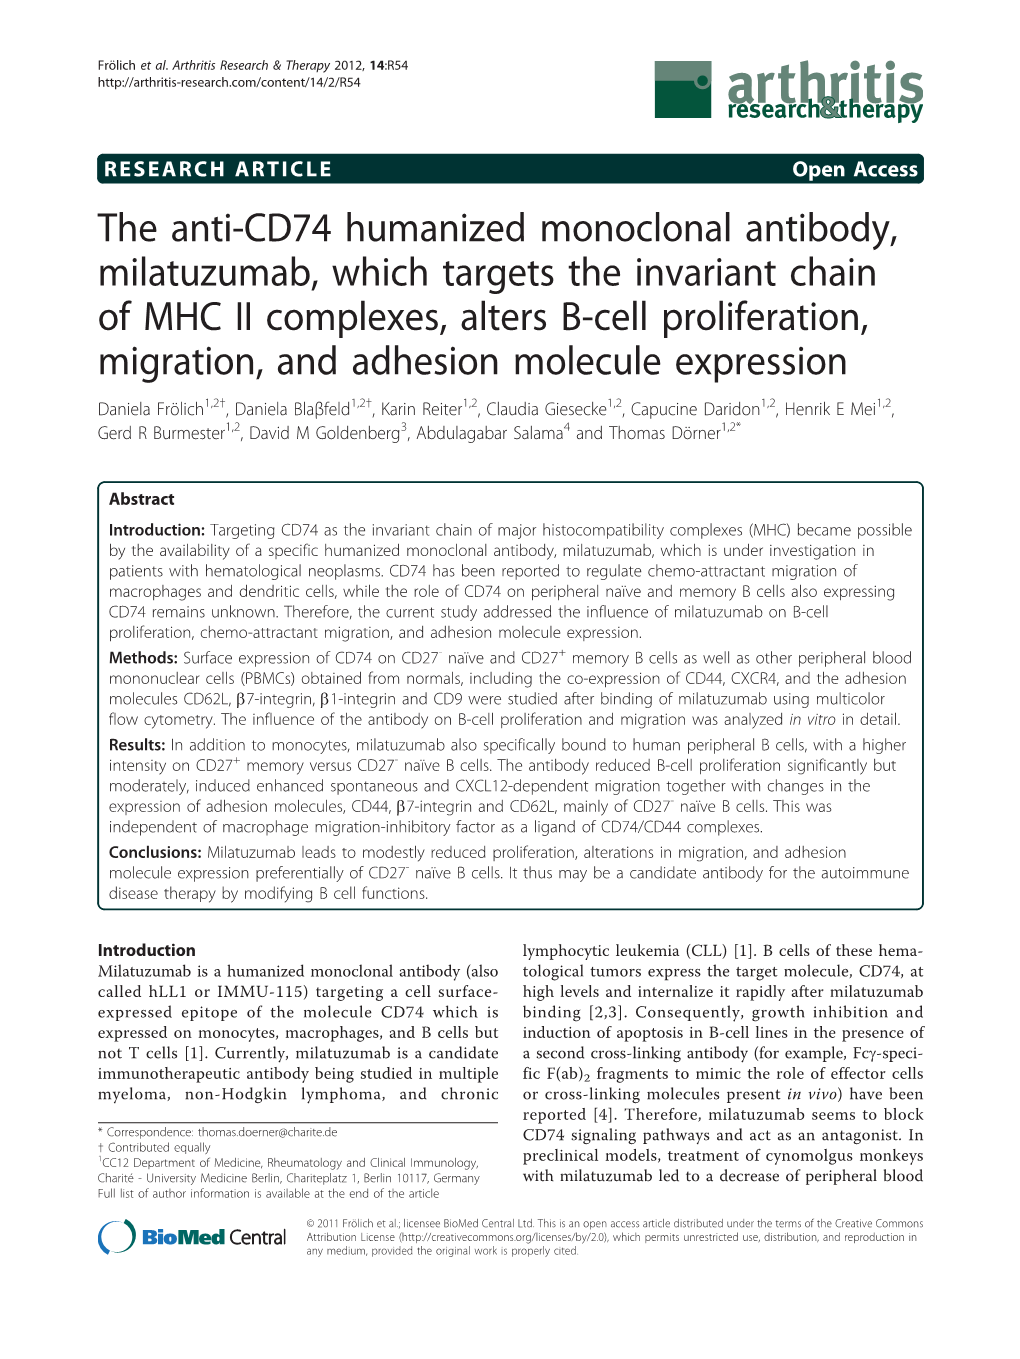 The Anti-CD74 Humanized Monoclonal Antibody, Milatuzumab